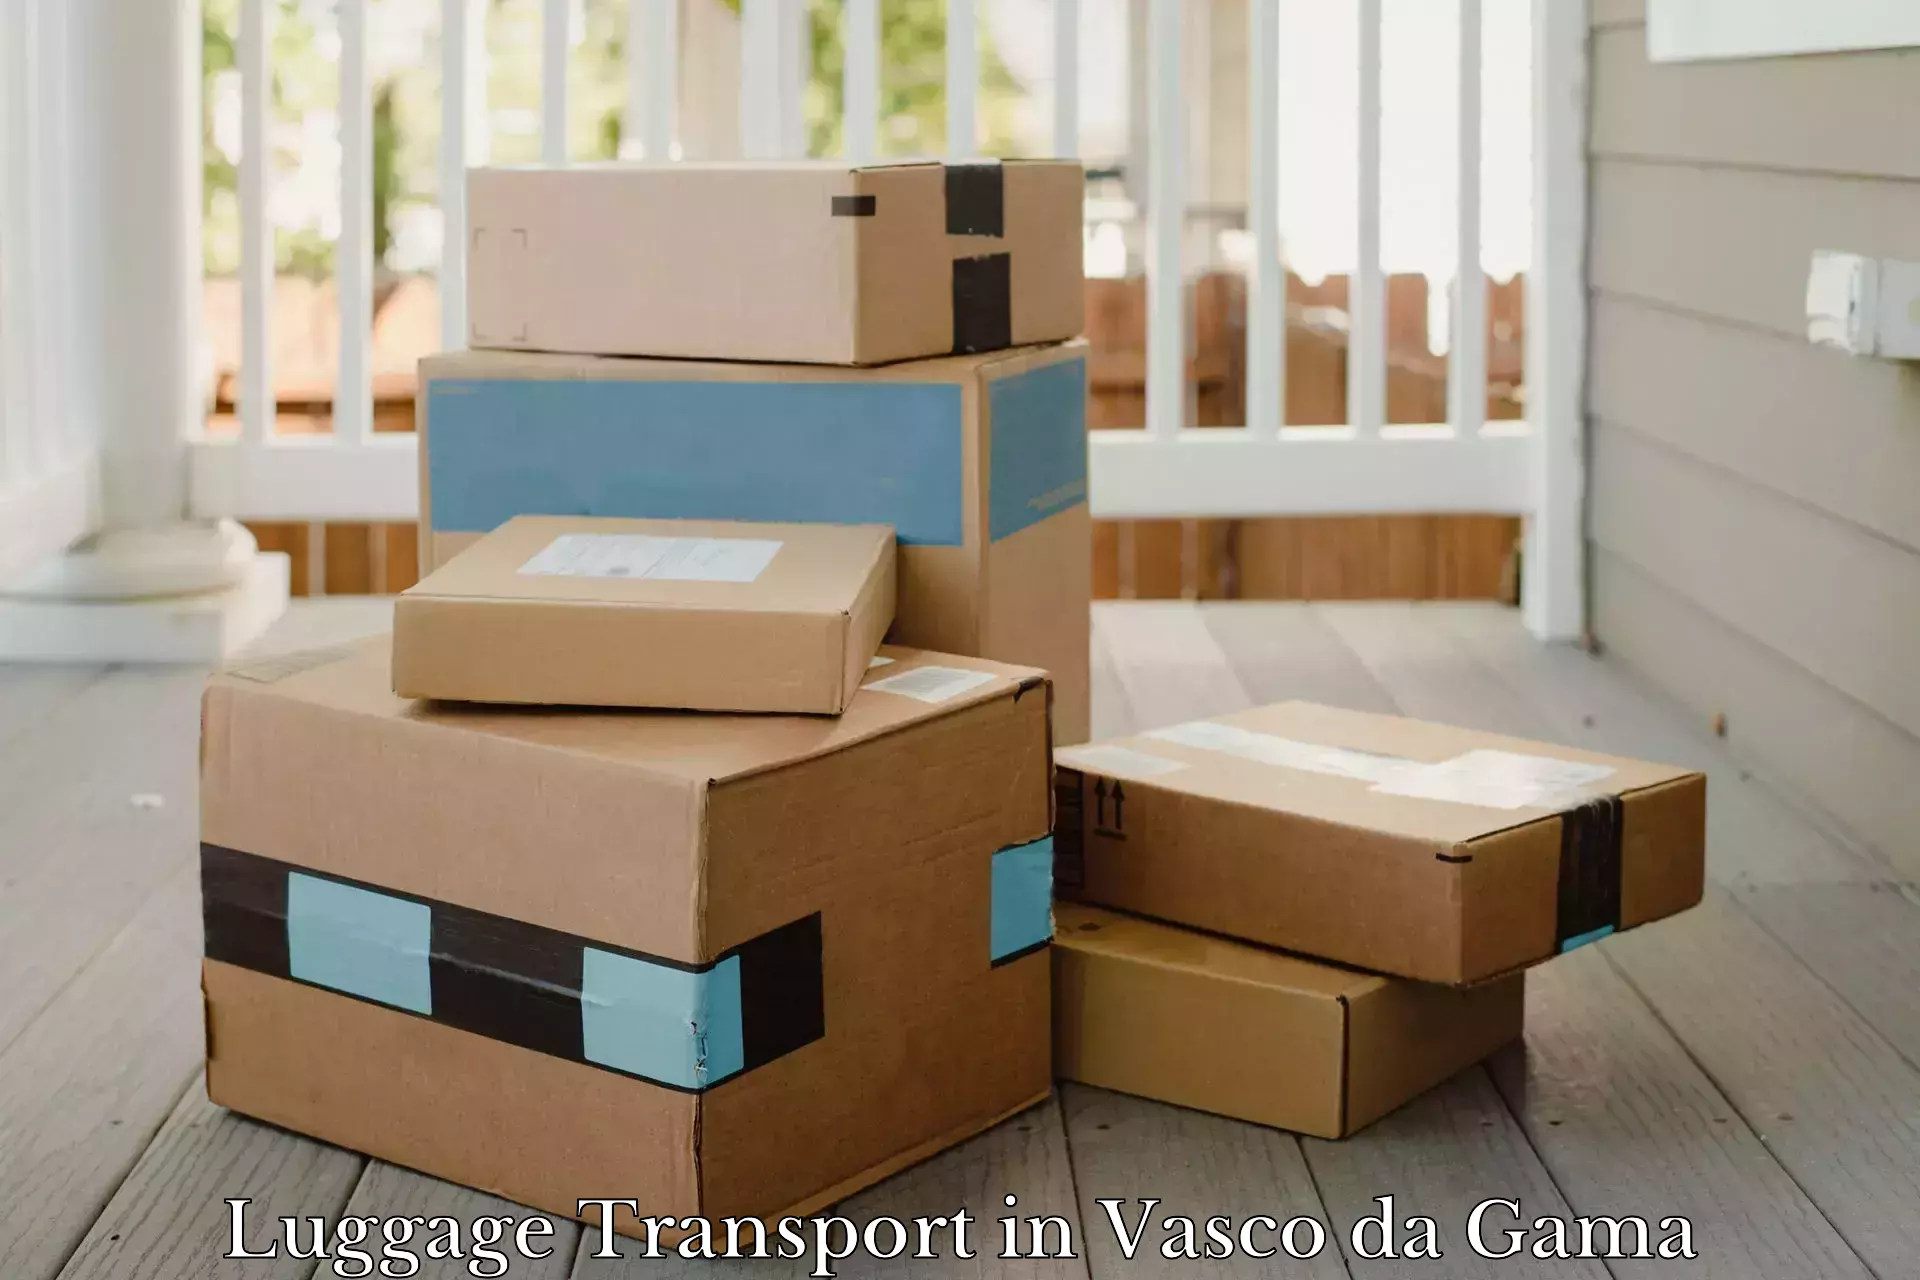 Luggage transport operations in Vasco da Gama